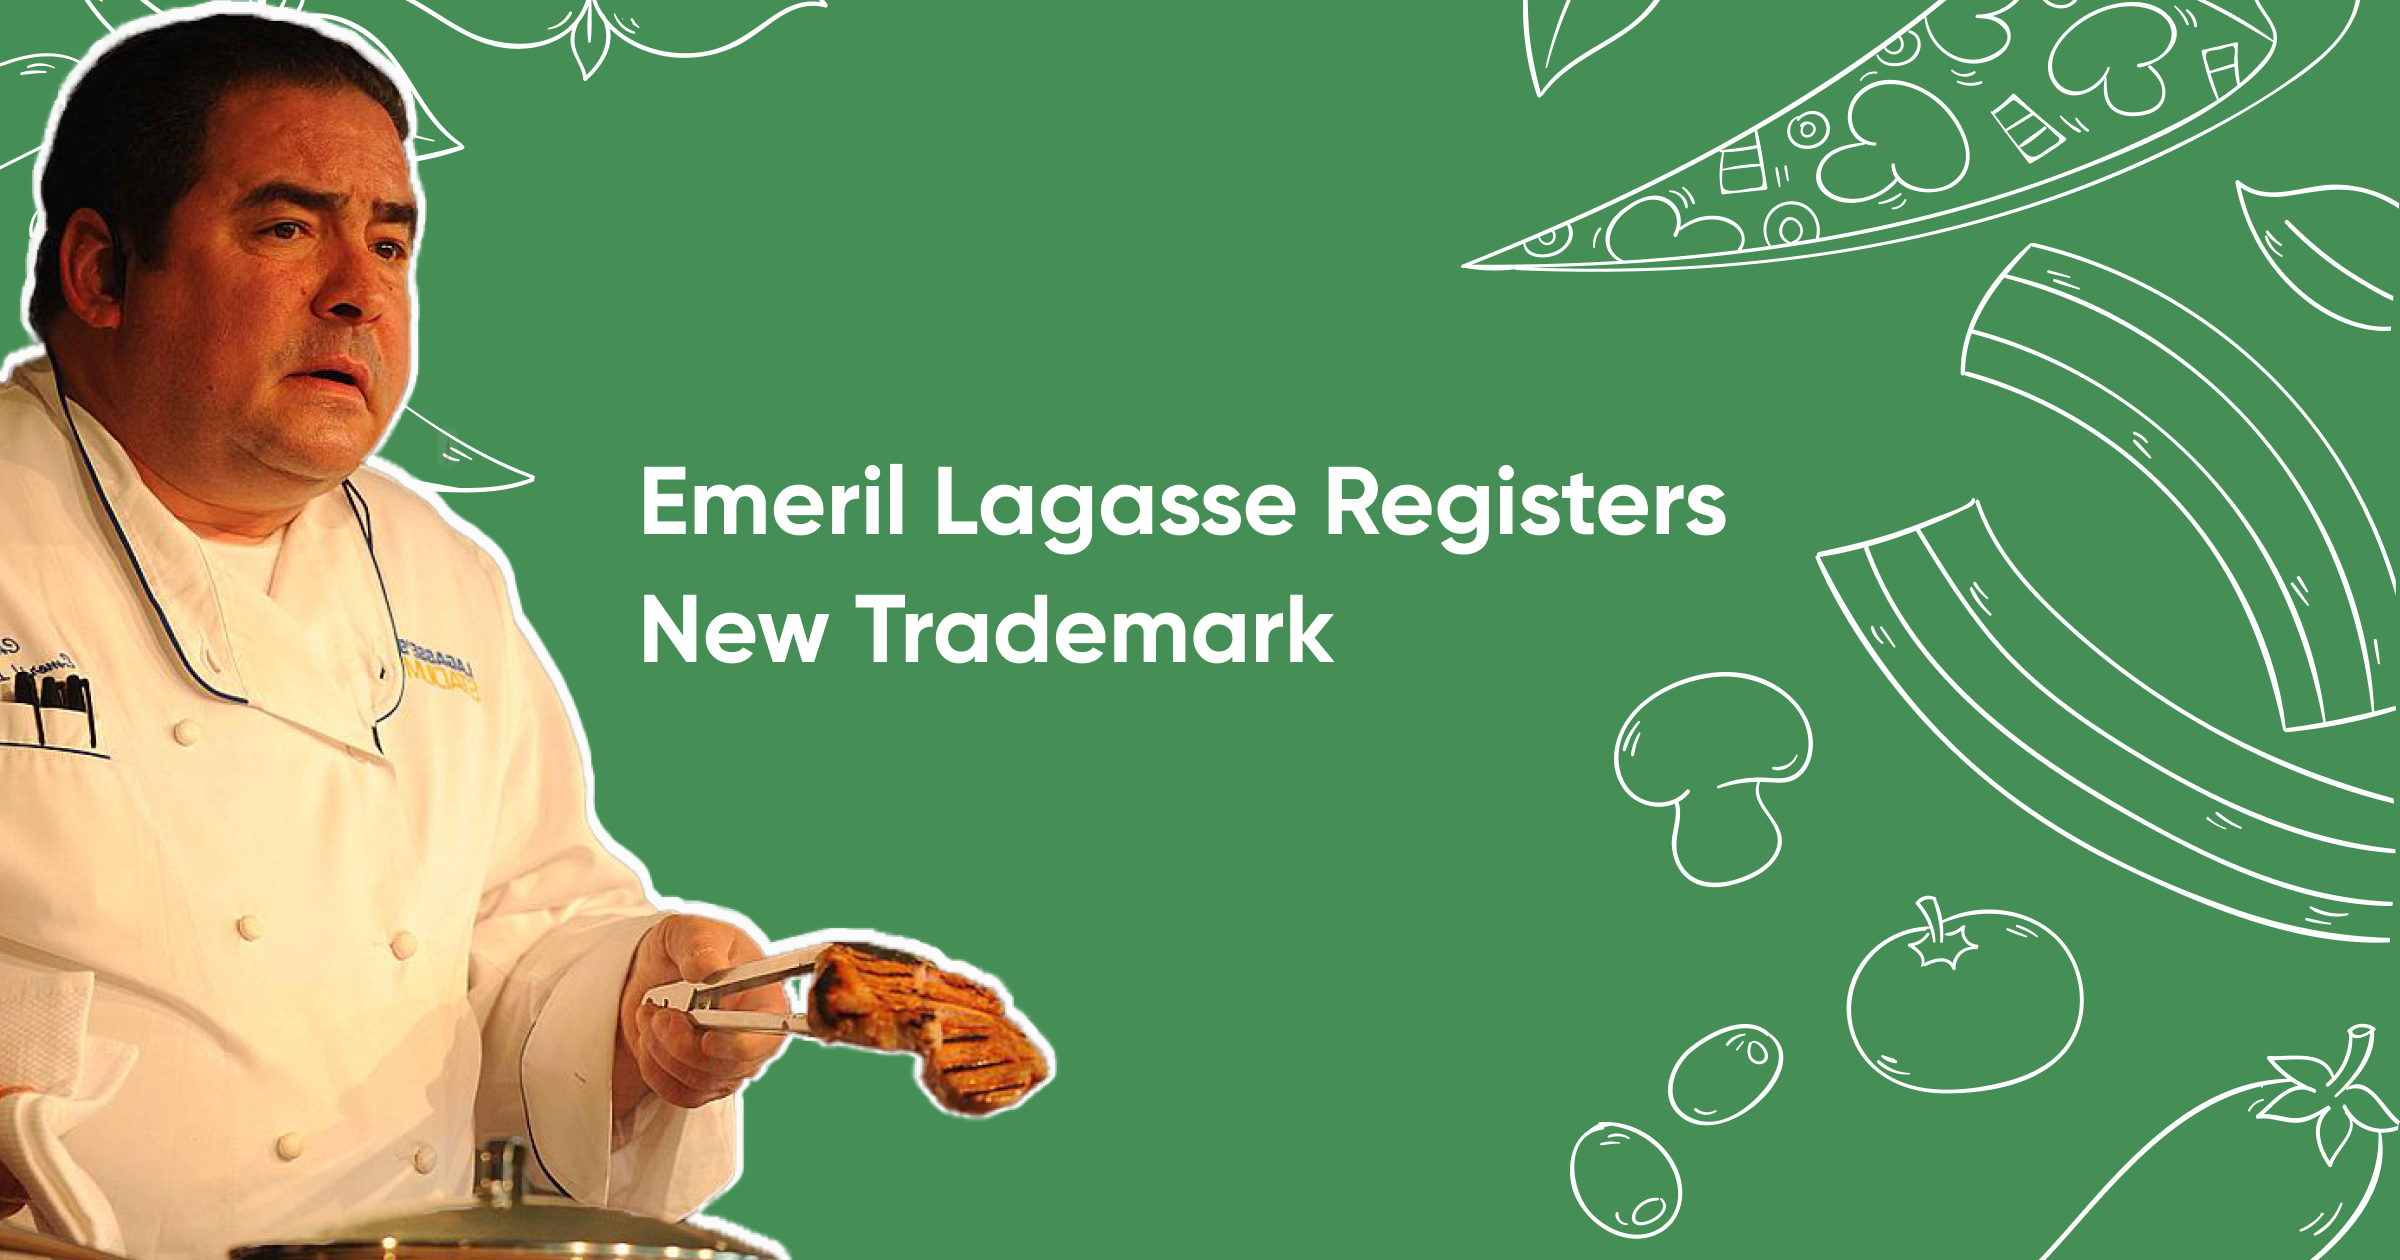 "Bam!" Celebrity Chef Emeril Lagasse Registers New "Emeril's Culinary Garden & Teaching Kitchen" Trademark